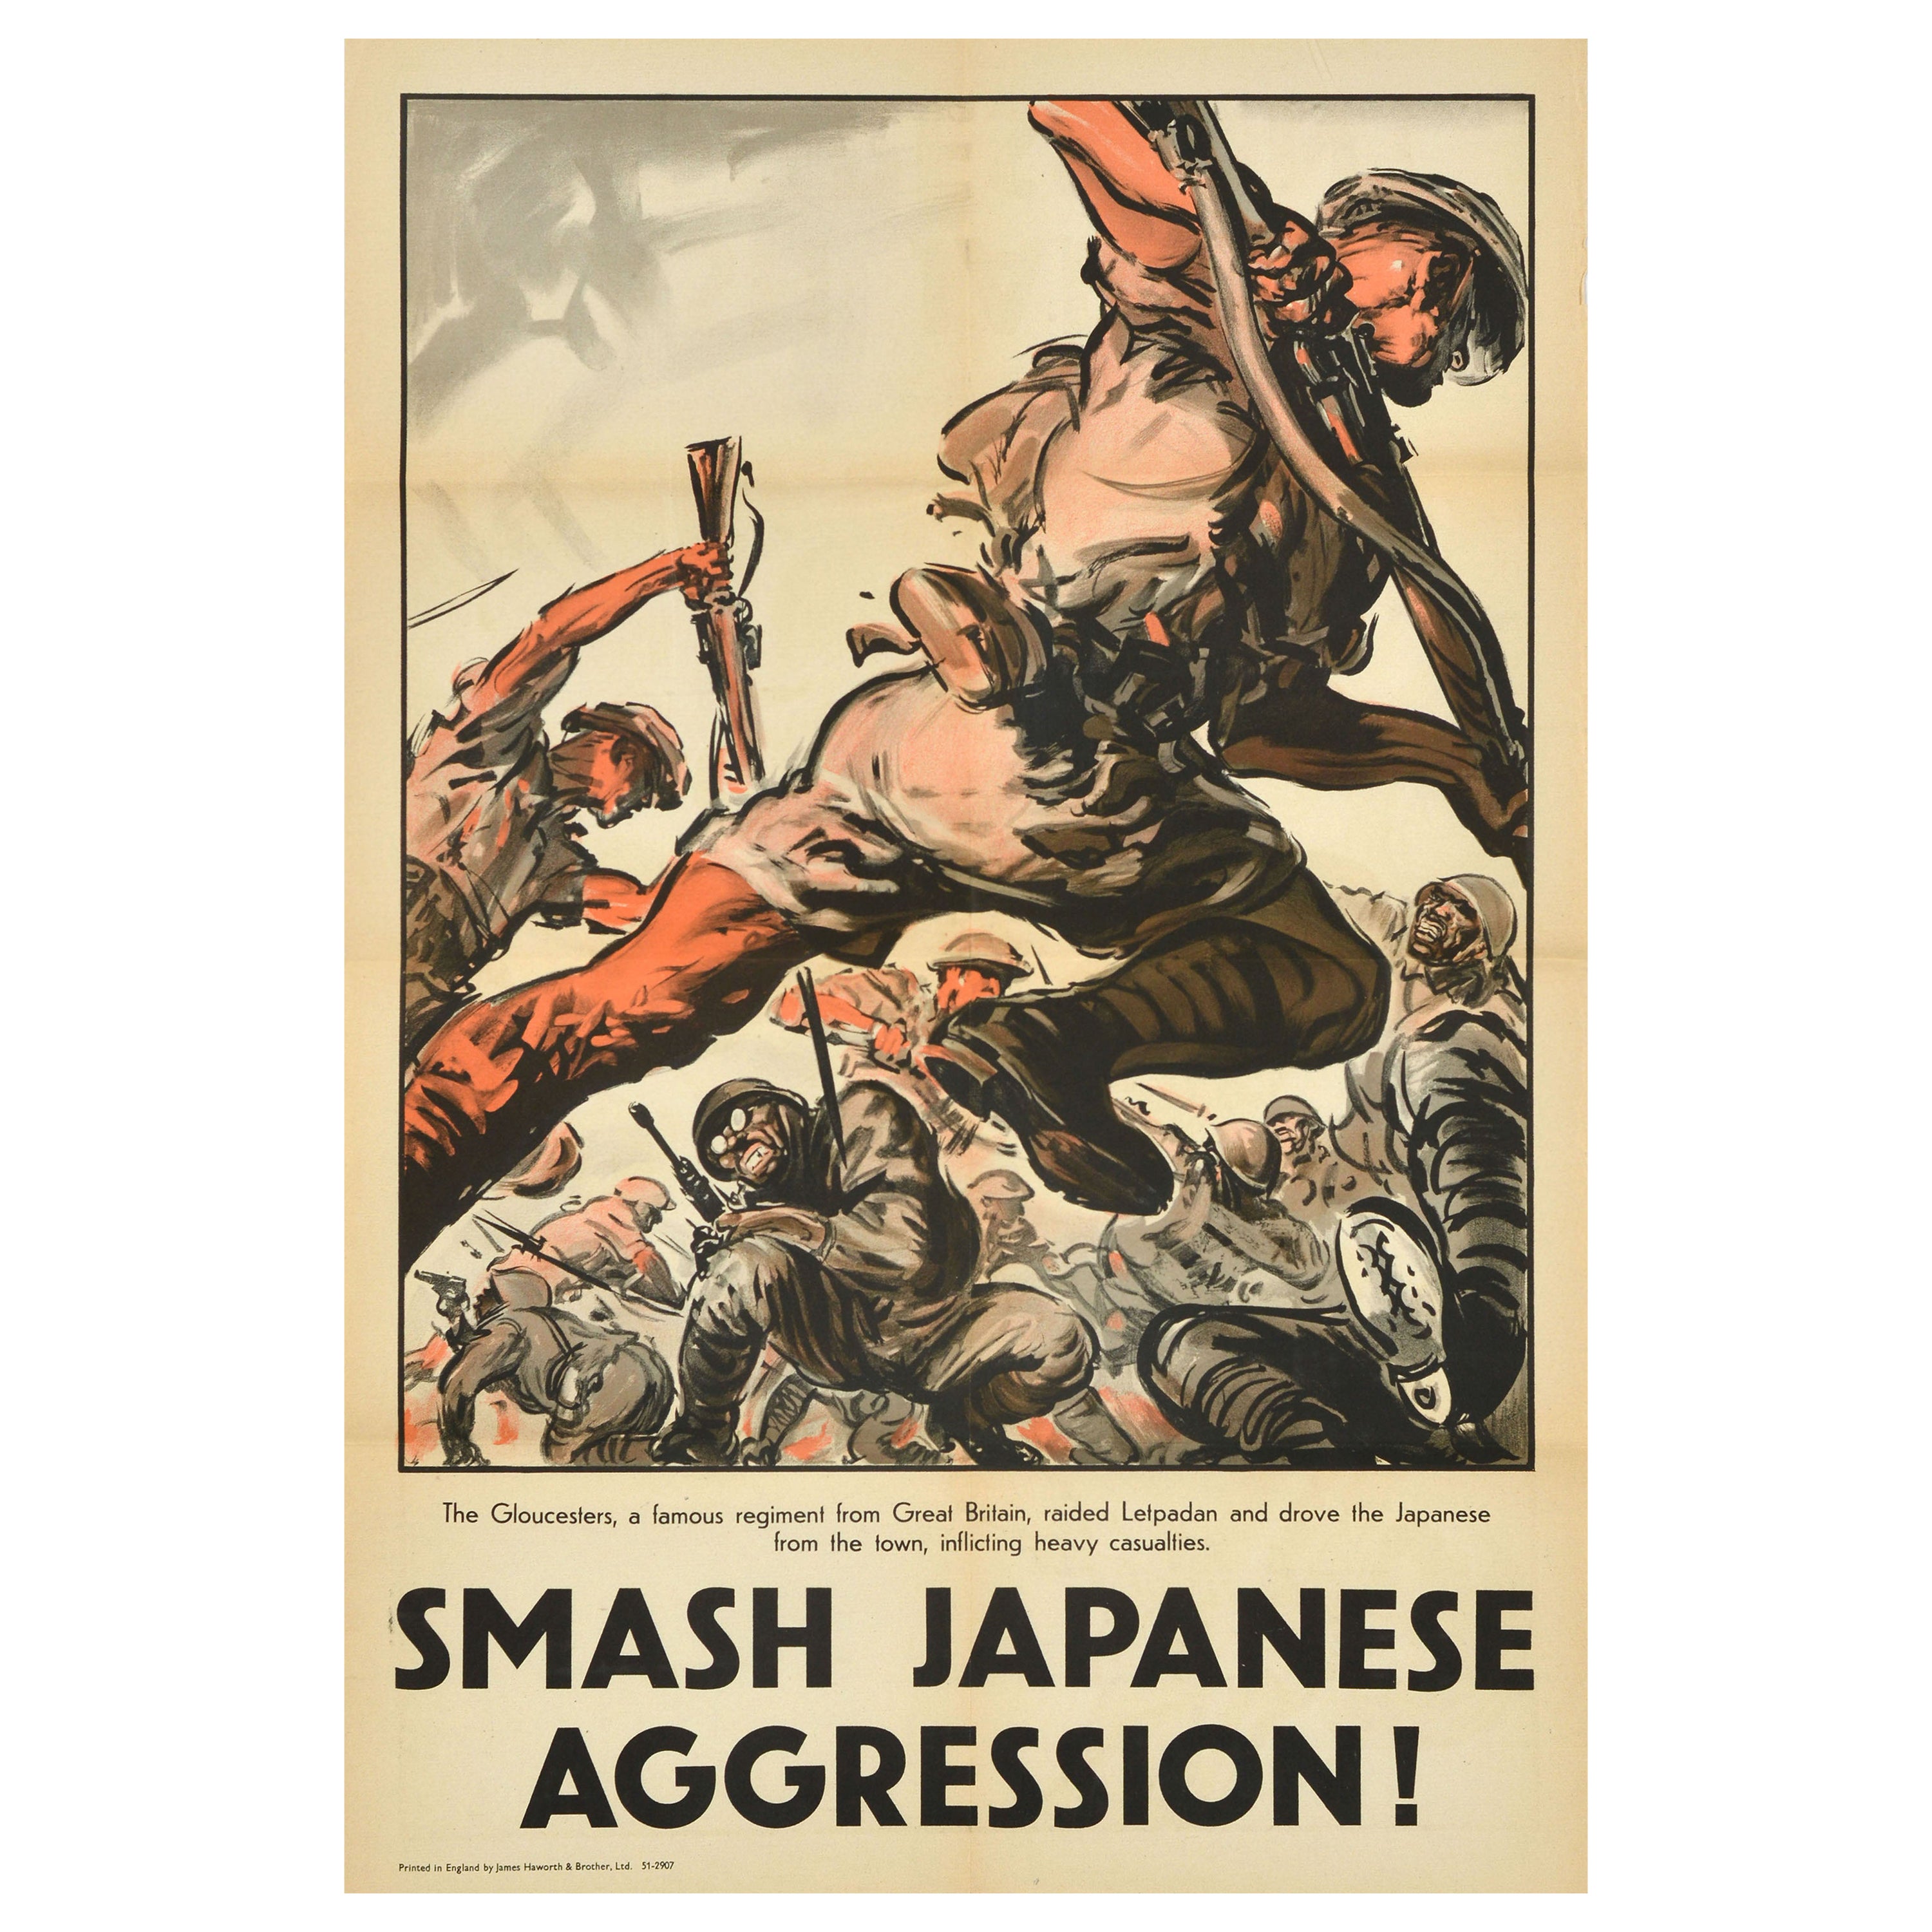 Original Vintage War Propaganda Poster Smash Japanese Aggression WWII Glosters